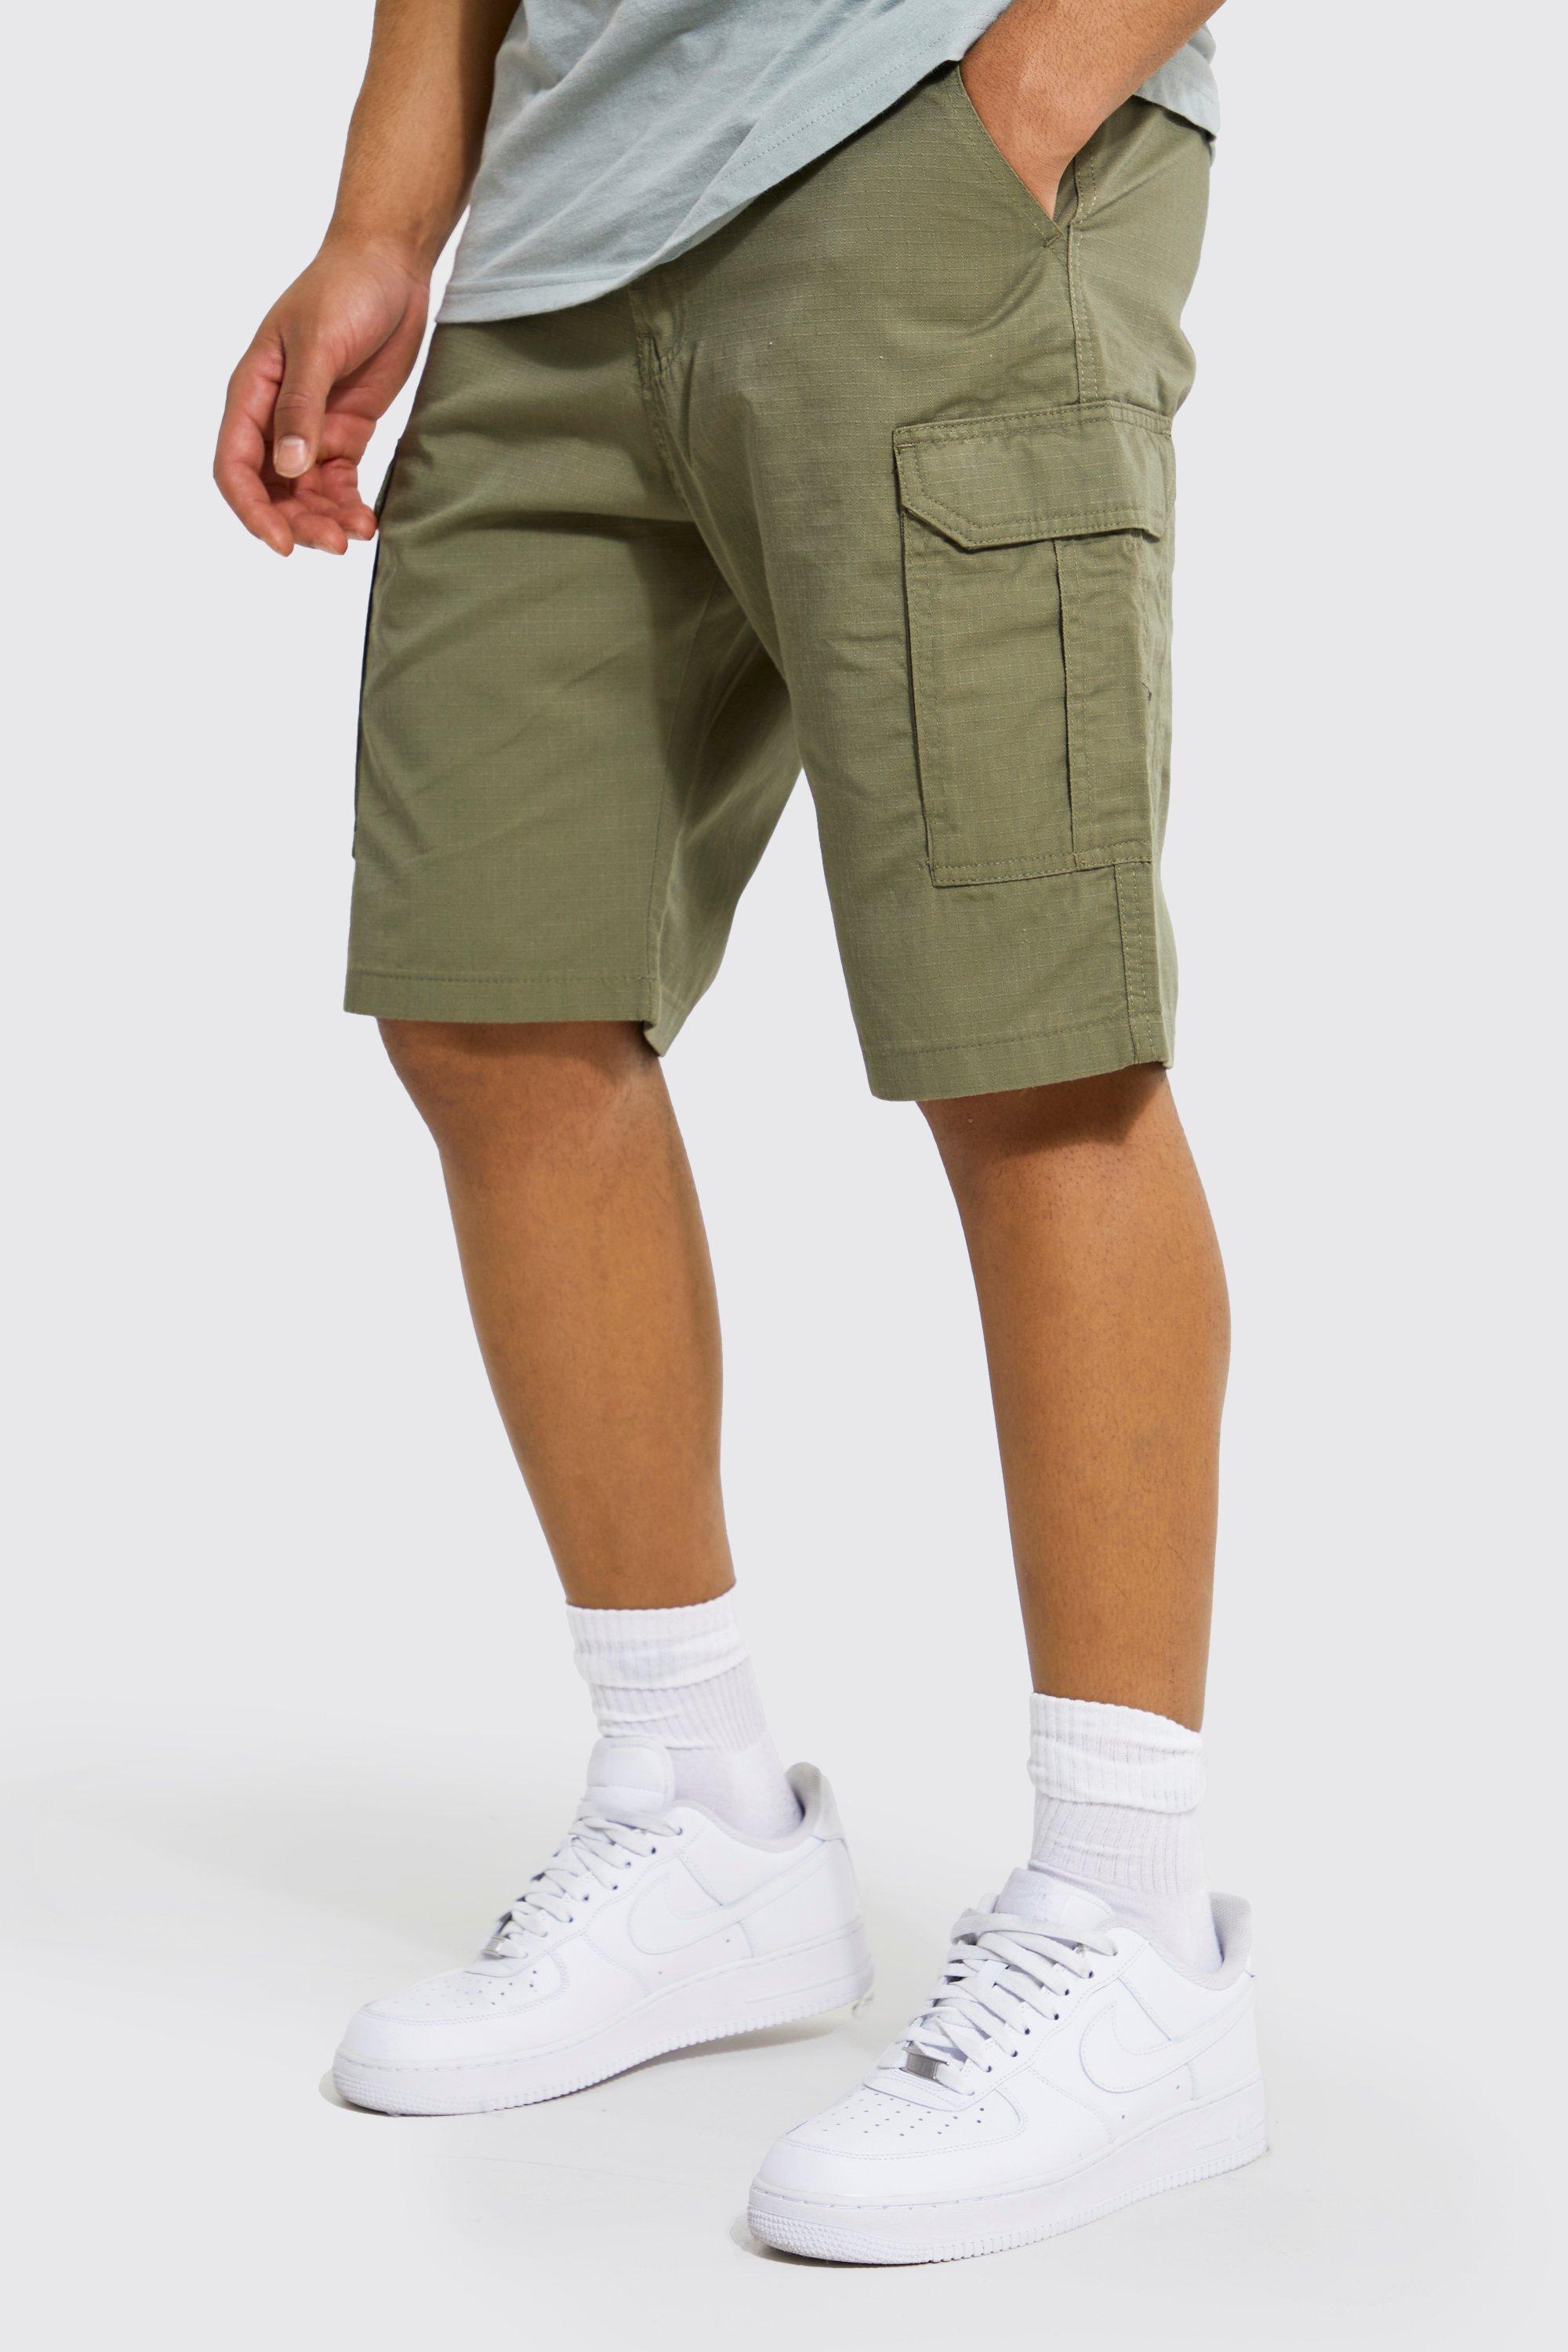 Womens Clothing Shorts Cargo shorts Green - Save 12% Boohoo Denim Fixed Waist Band Cargo Shorts in Khaki 